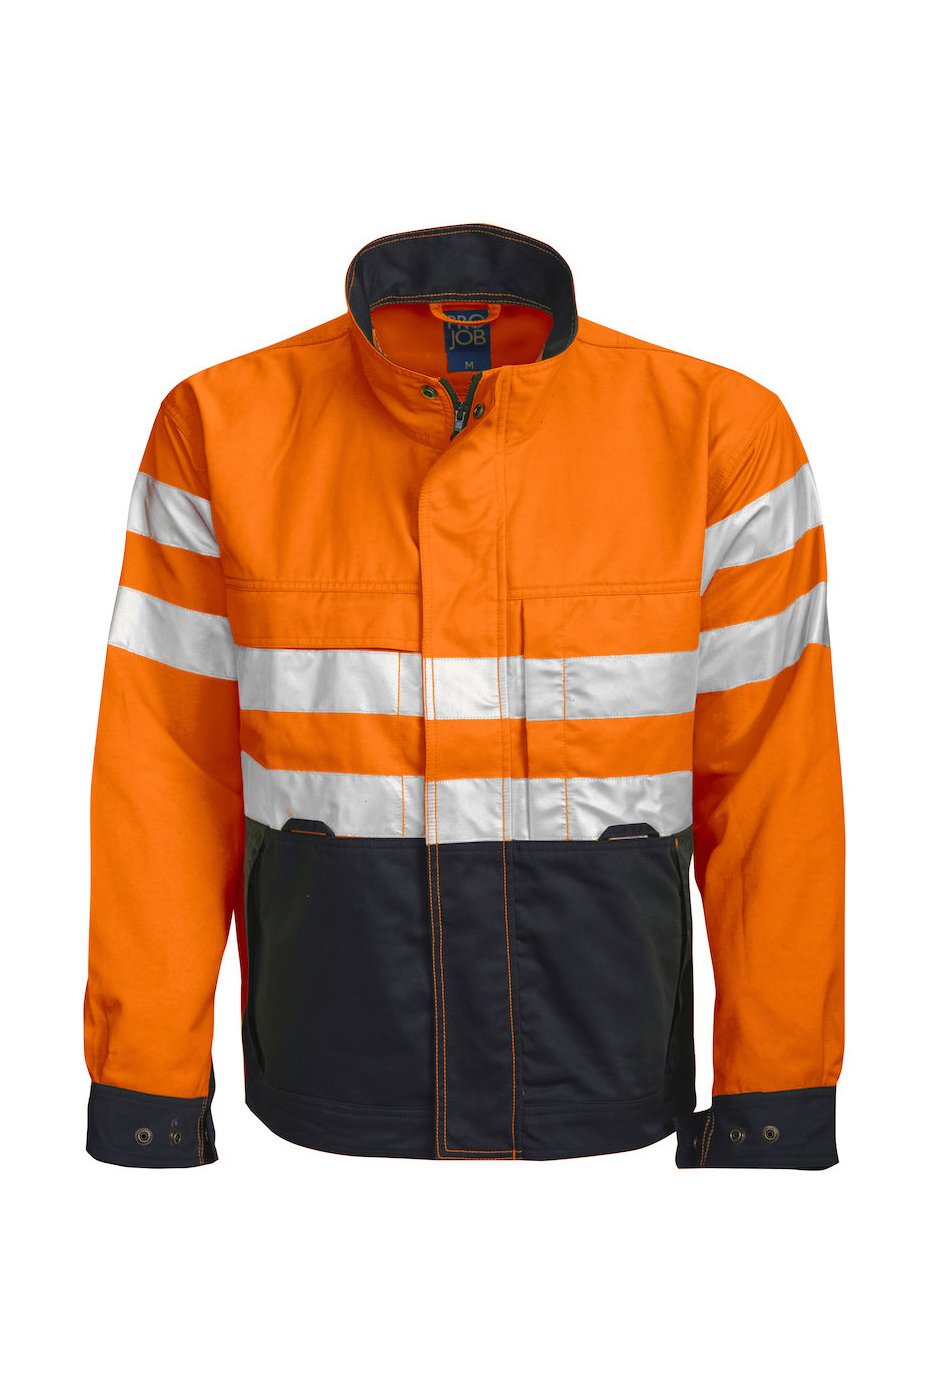 Ungefütterte Warnschutz-Jacke EN ISO 20471 Klasse 3, gelb/marineblau